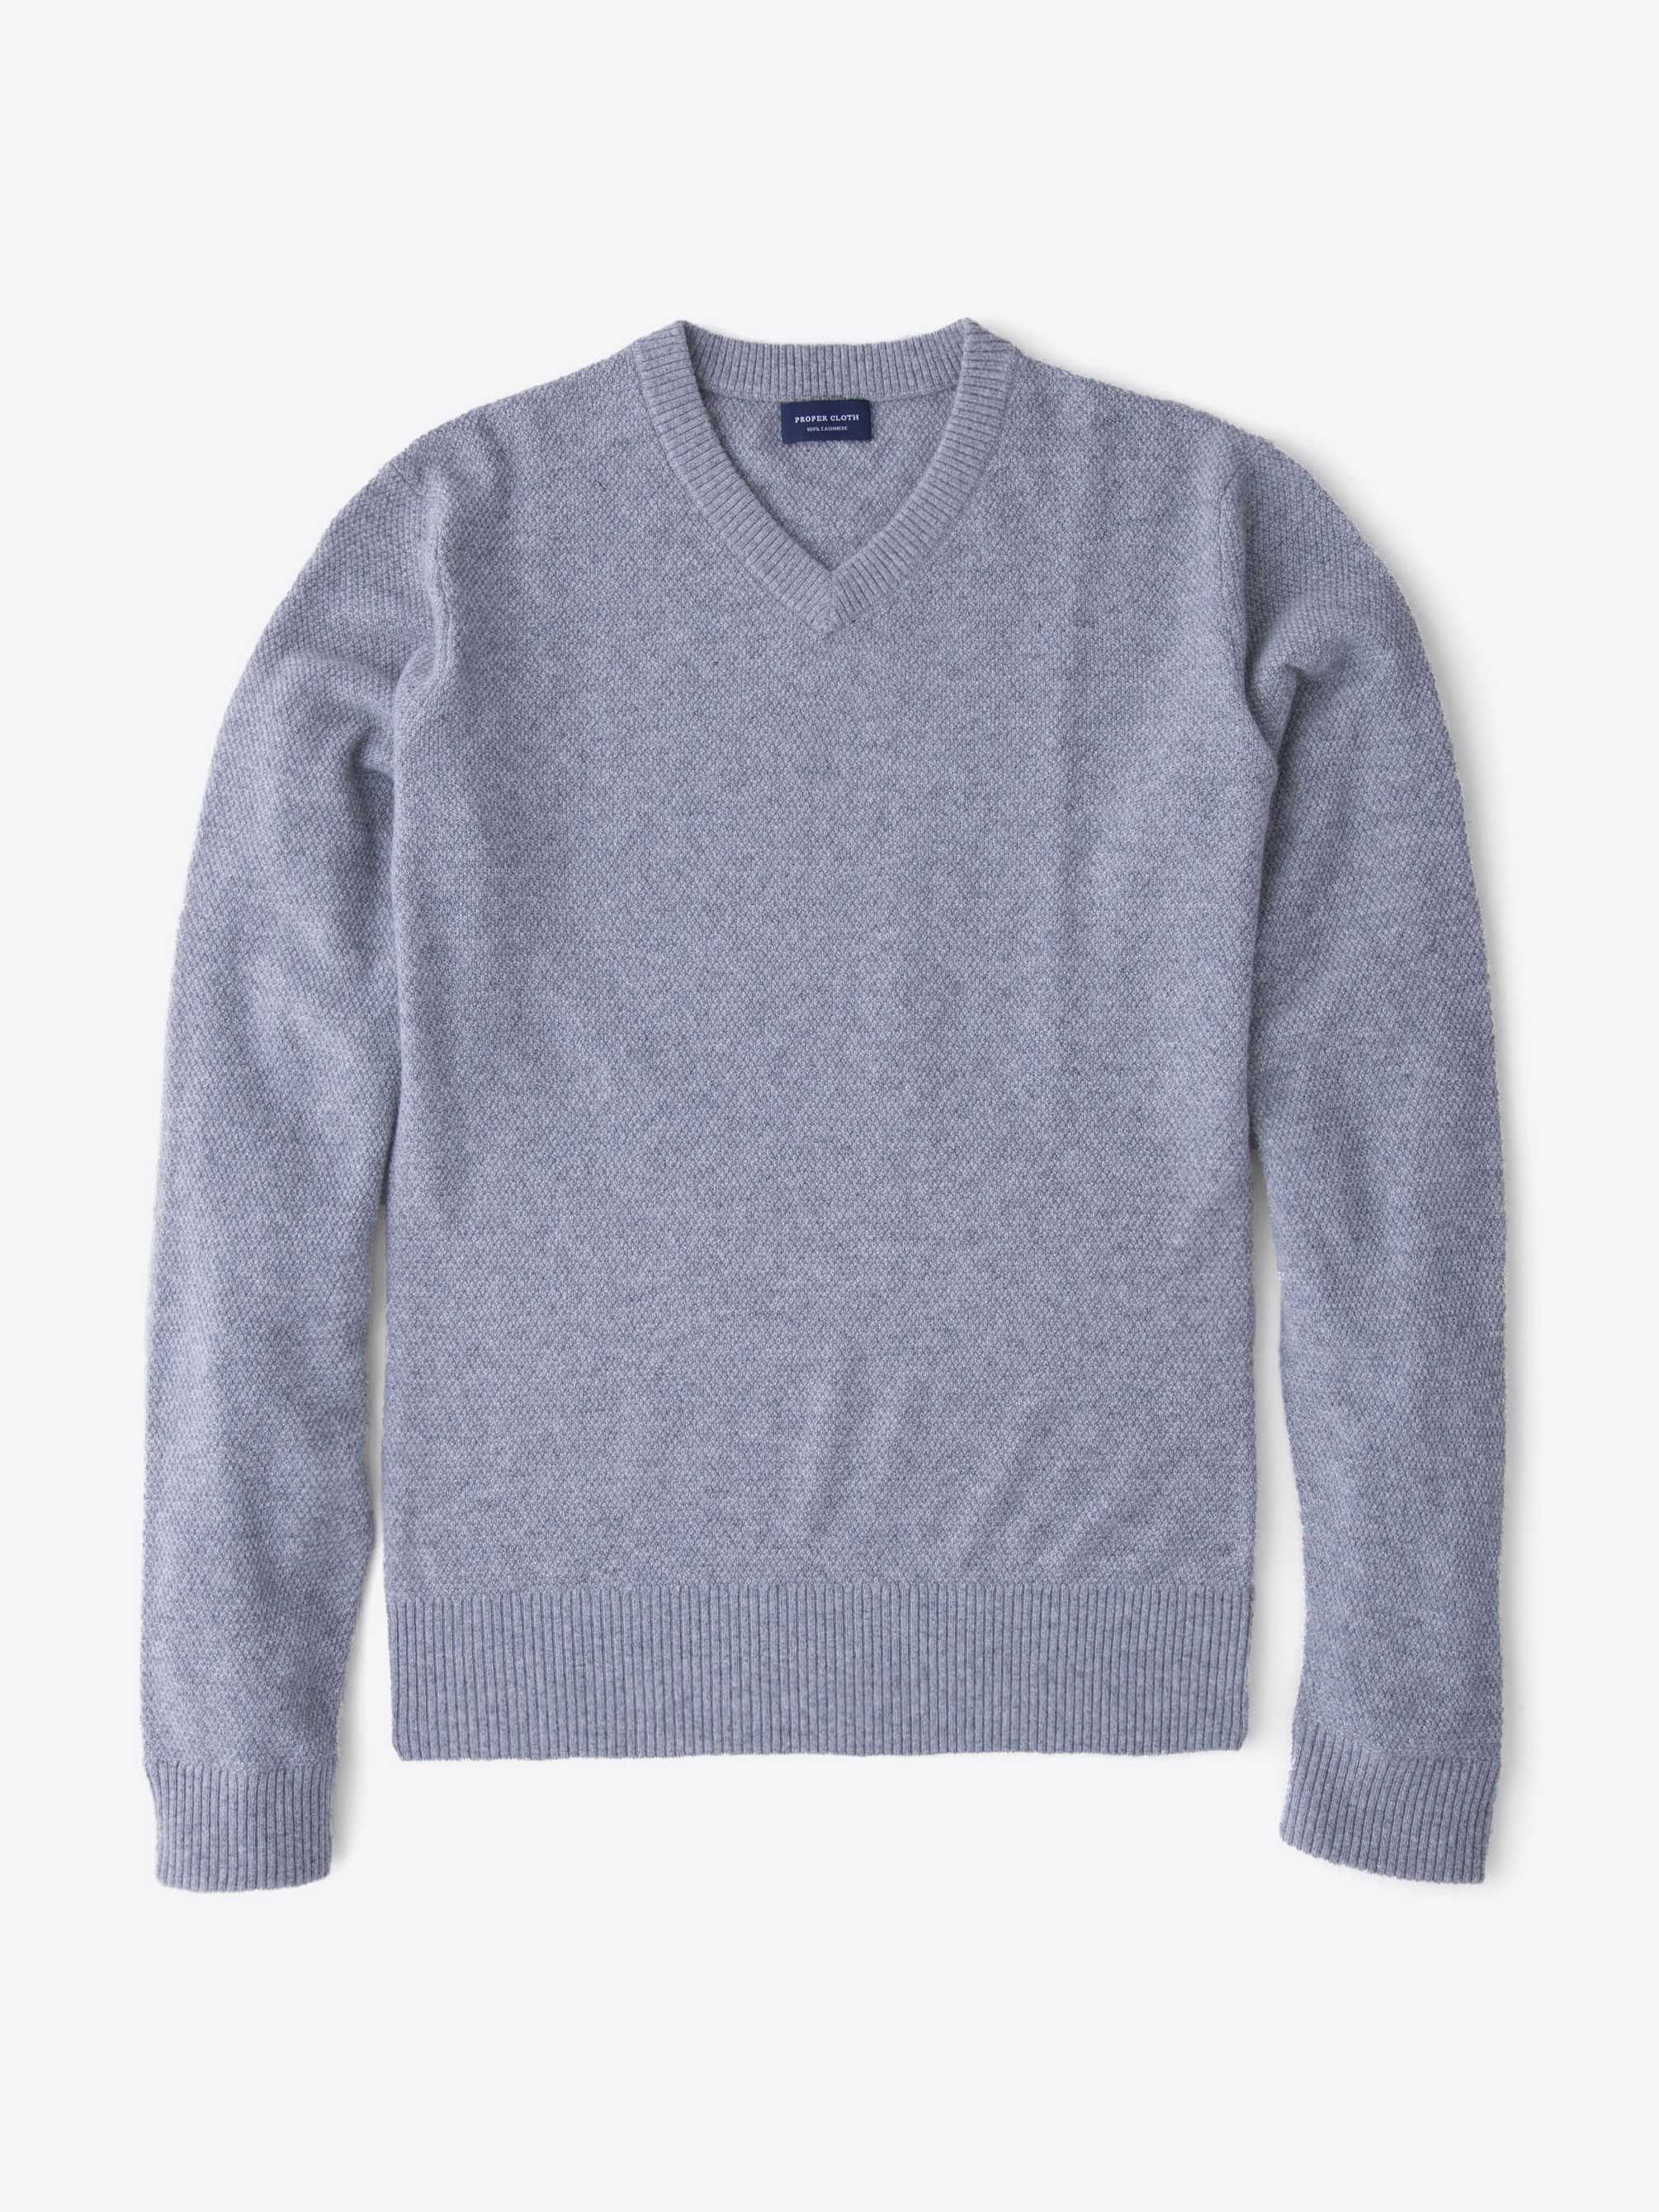 Zoom Image of Light Grey Cobble Stitch Cashmere V-Neck Sweater